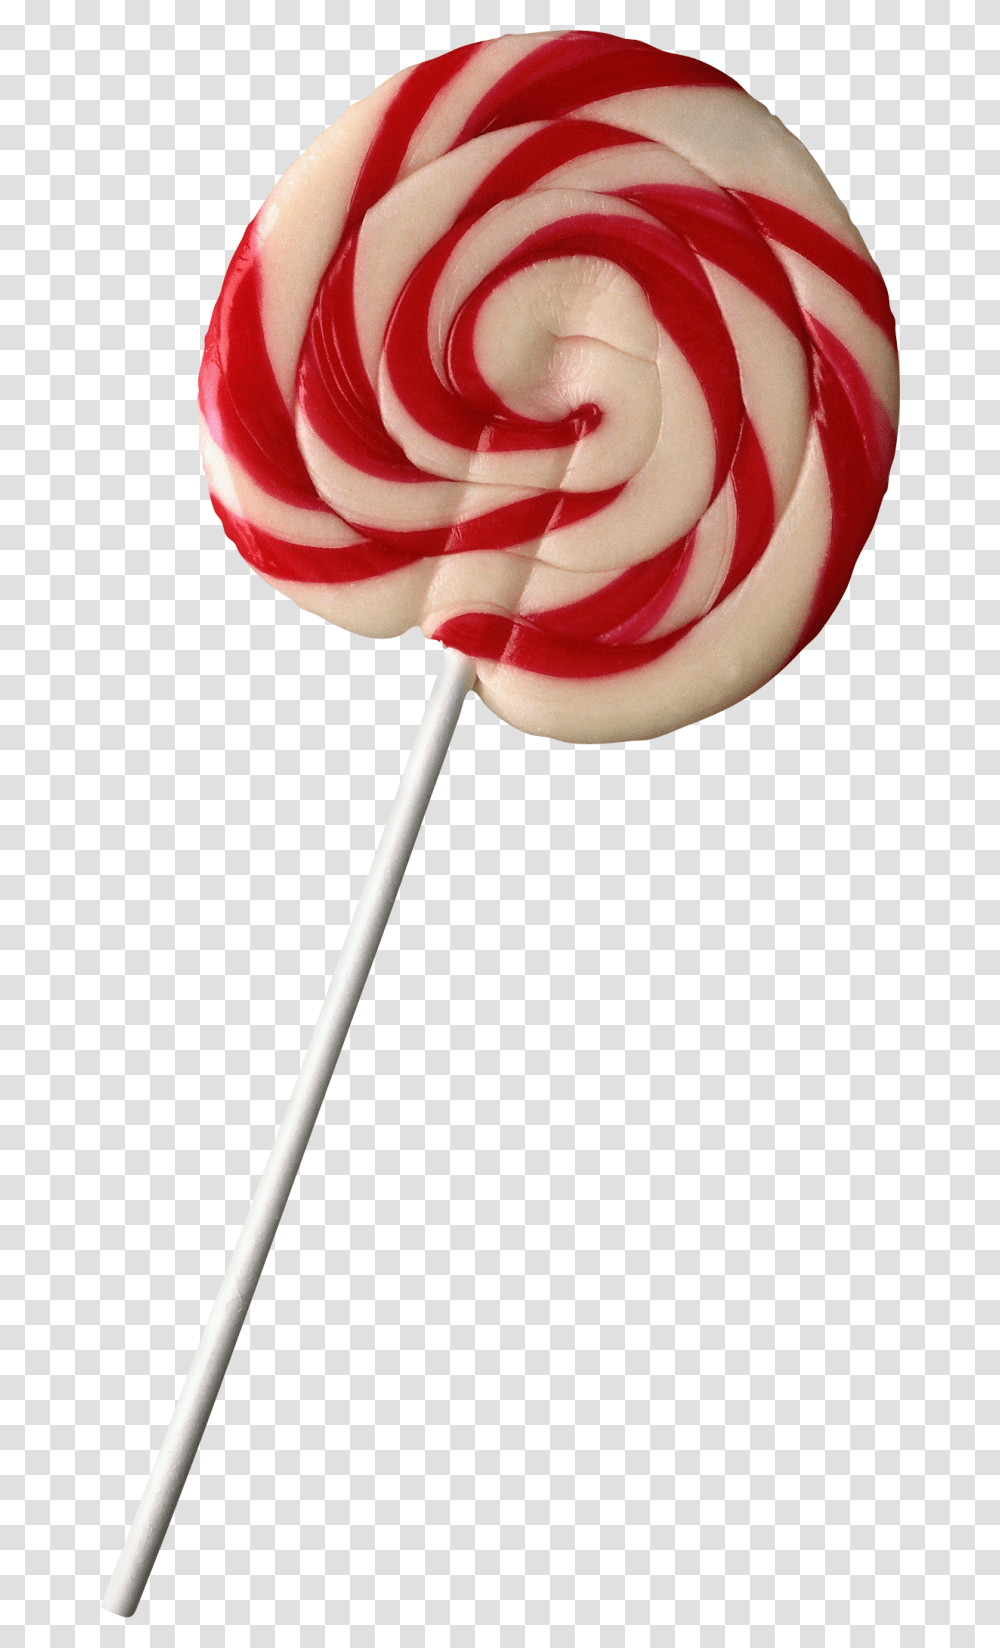 Lollipop Image Lollipop, Food, Sweets, Confectionery, Candy Transparent Png